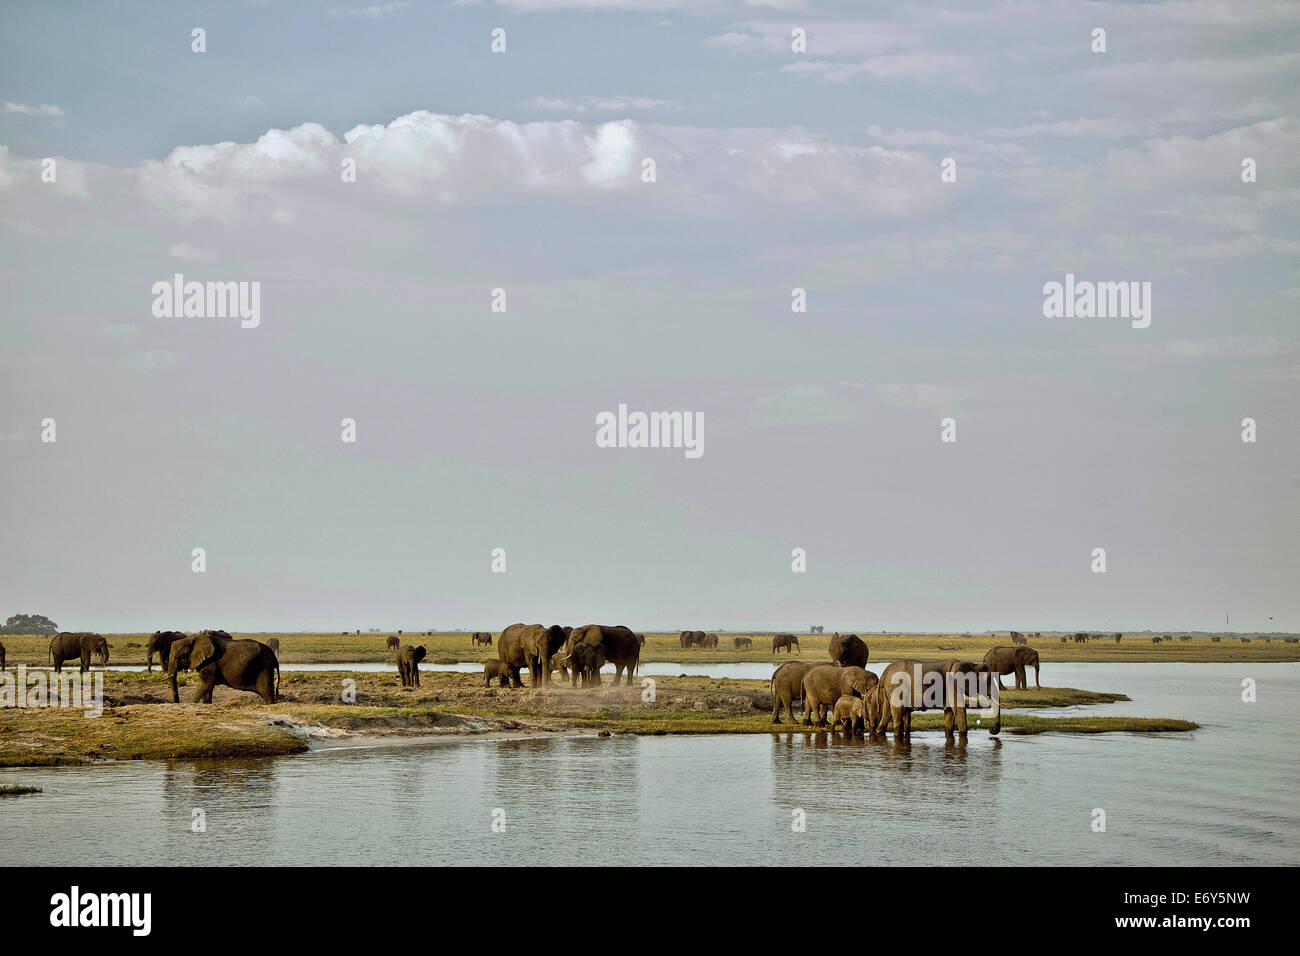 Elephants on the banks of the Chobe River, Botswana, Africa Stock Photo